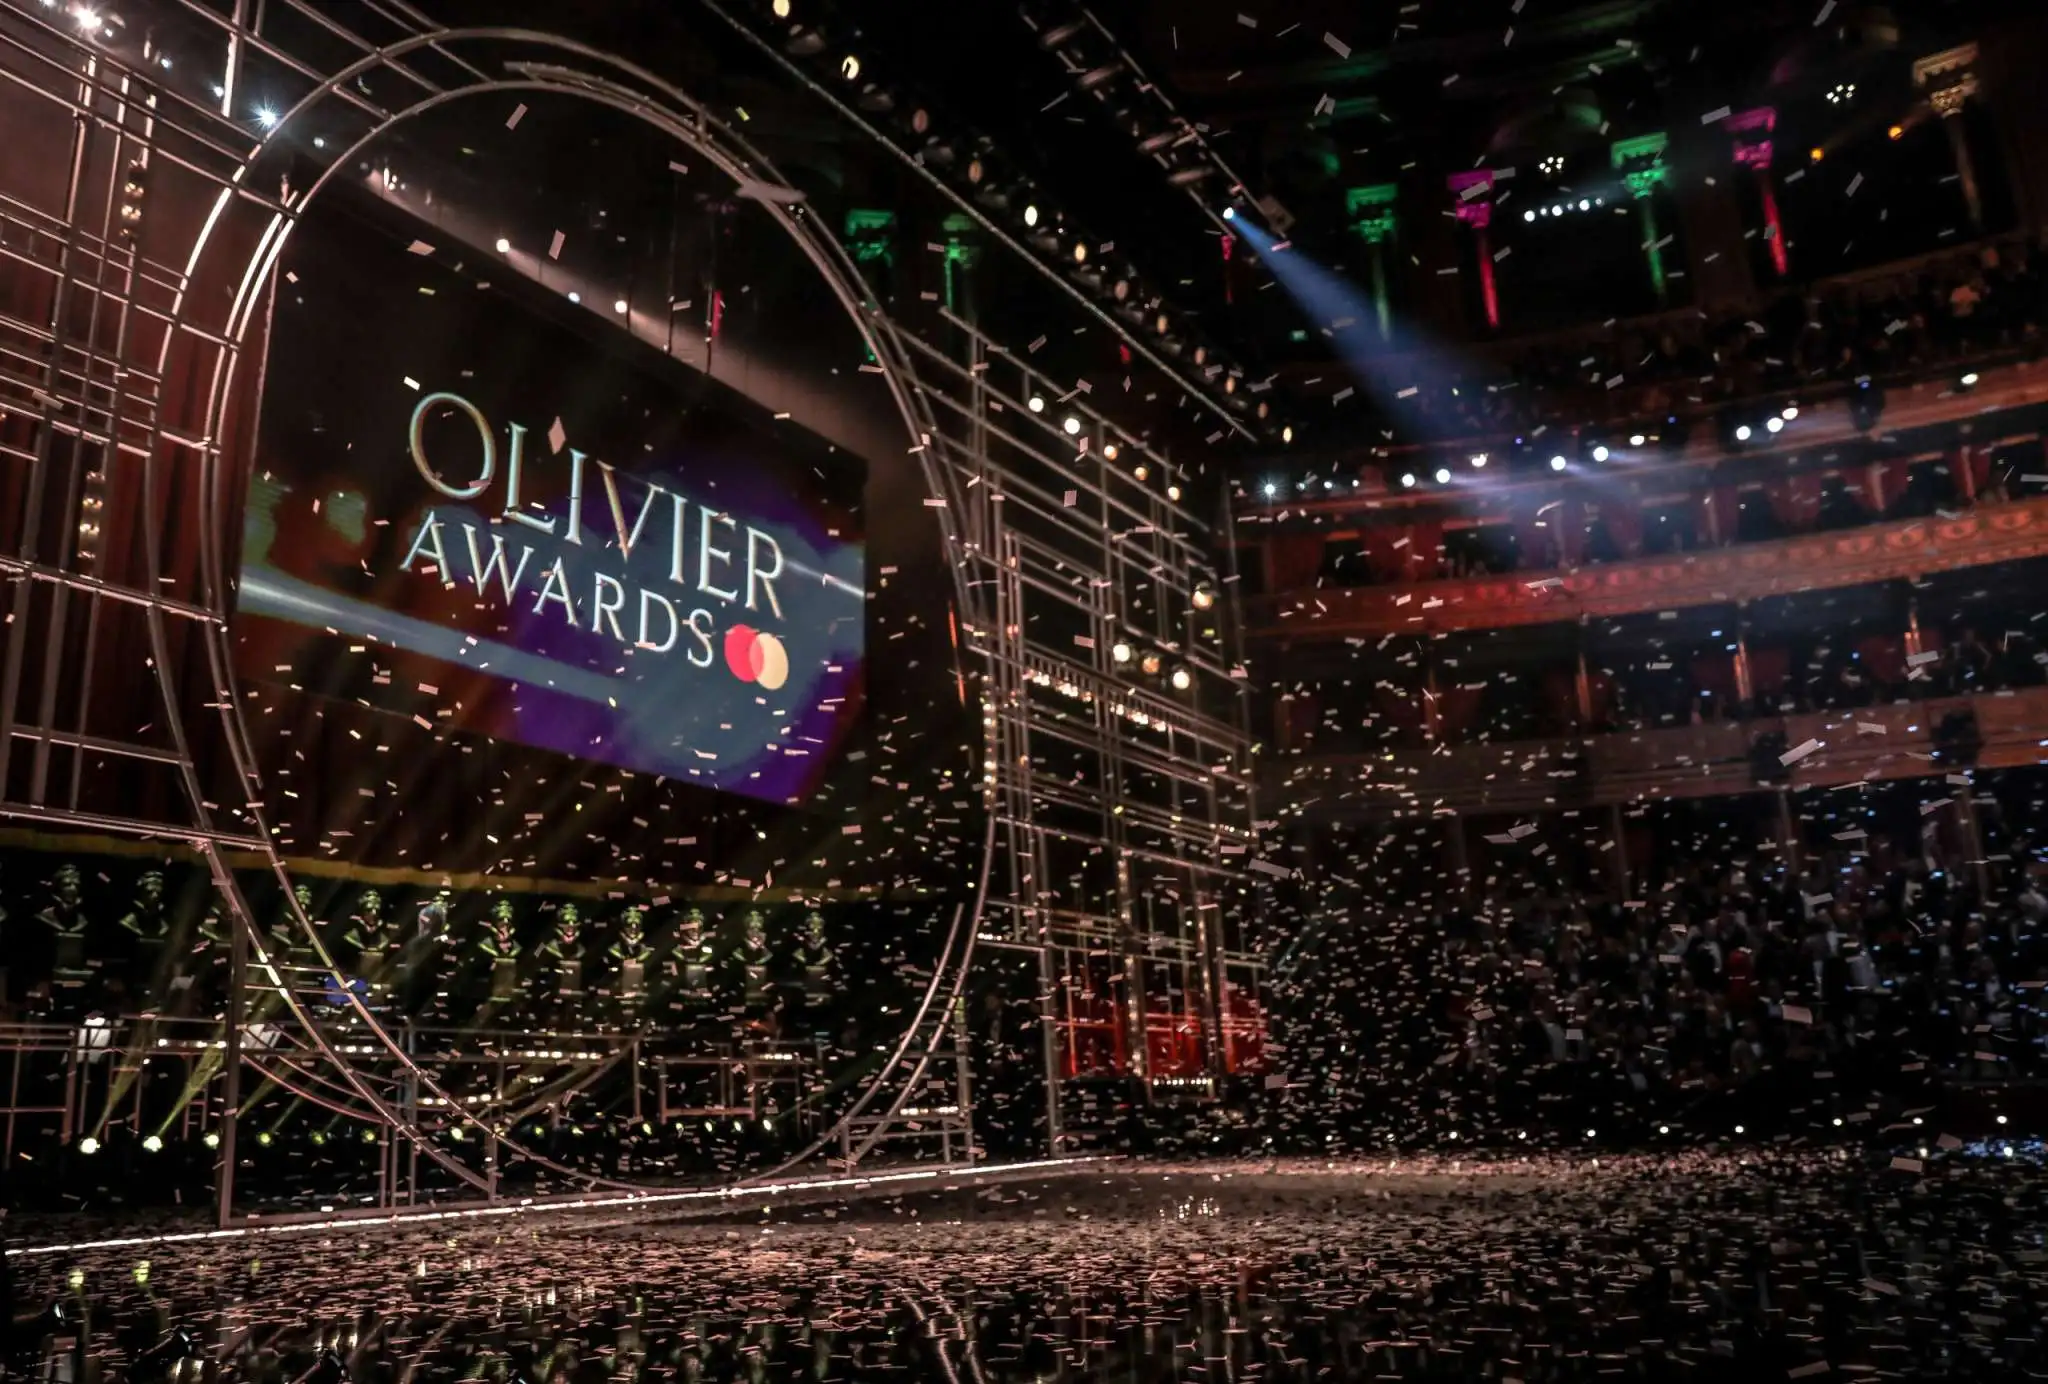 the Olivier Awards